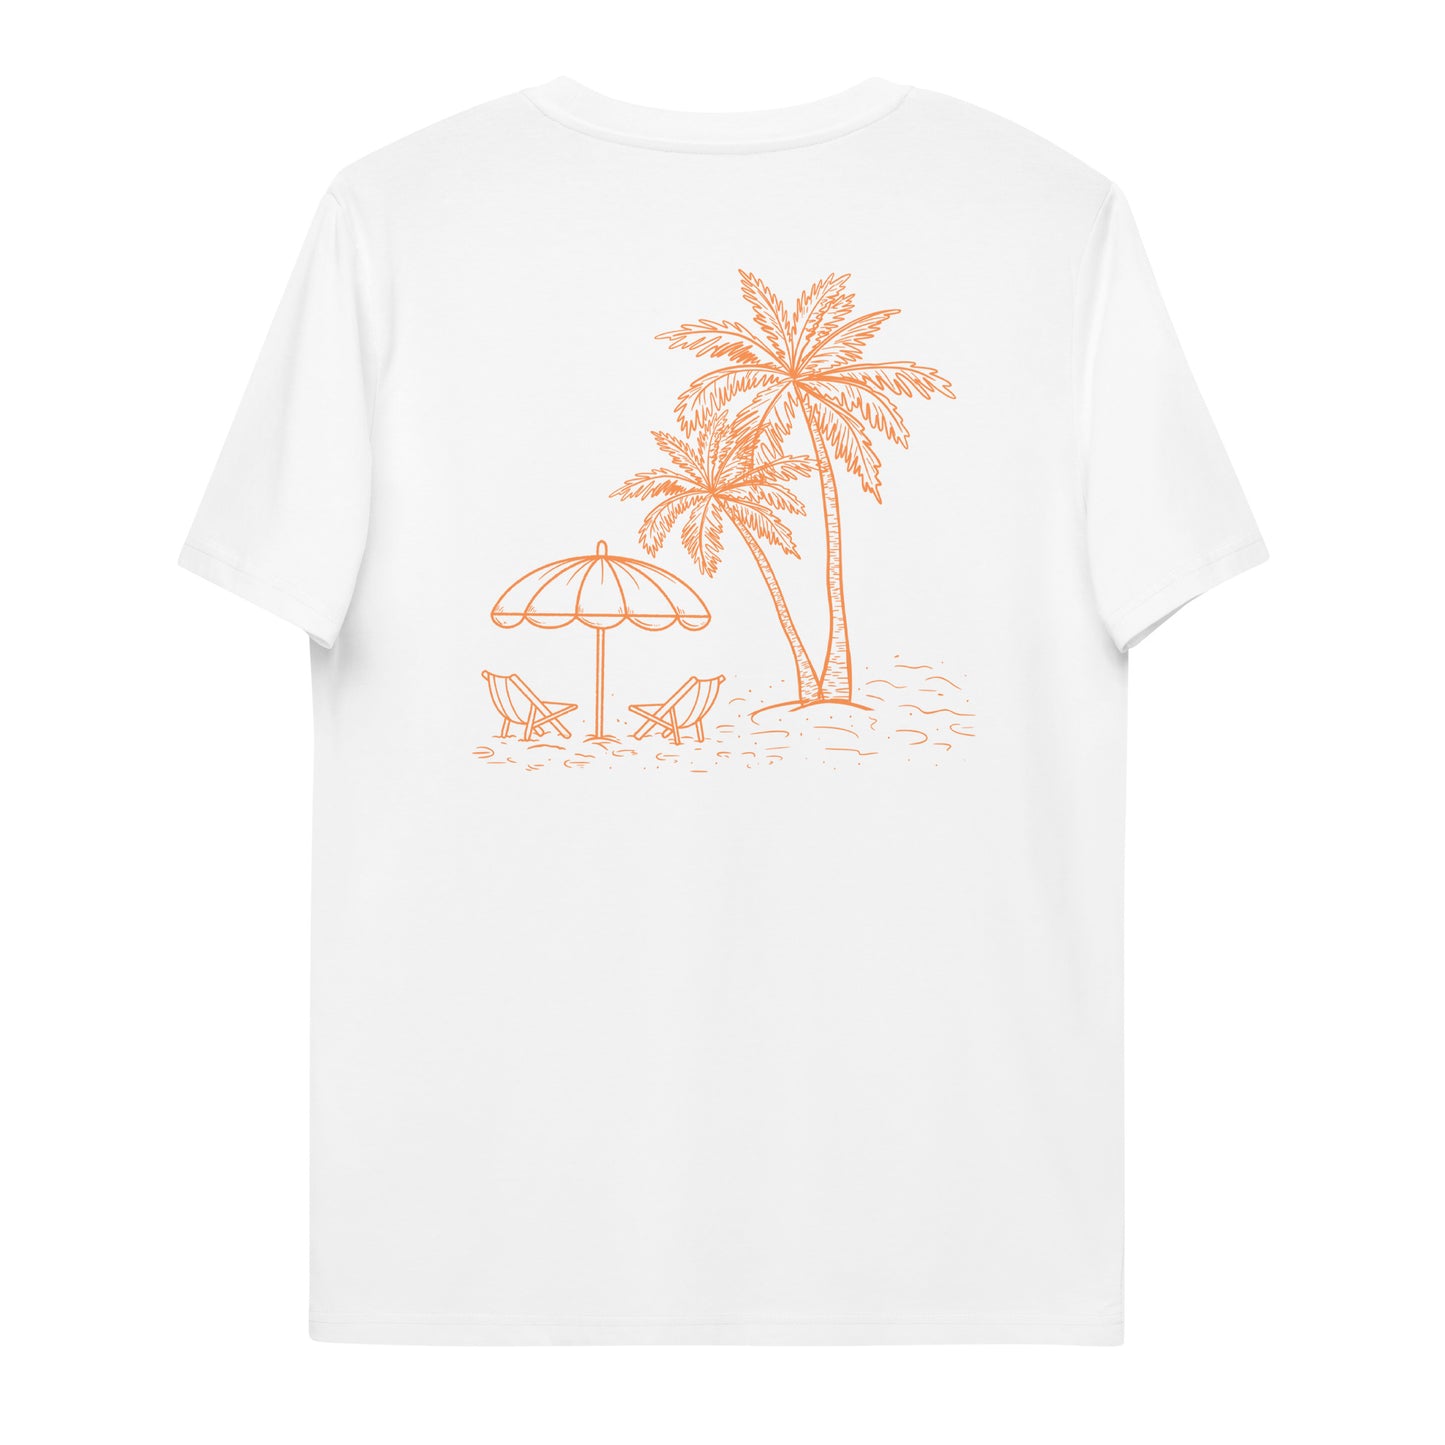 Seaside Living Unisex Organic Cotton T-Shirt